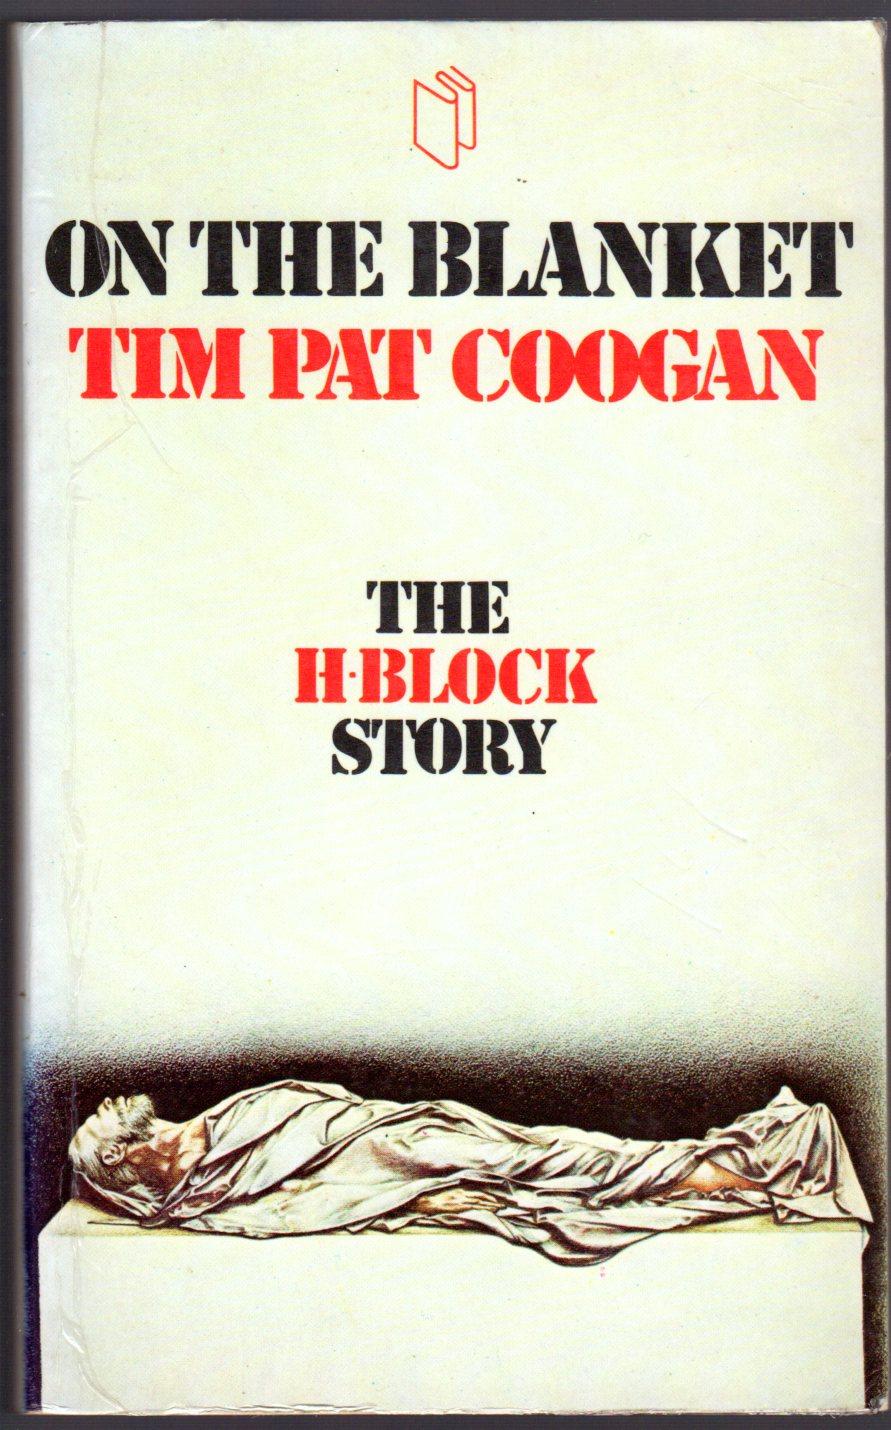 On the Blanket - Coogan, Tim Pat